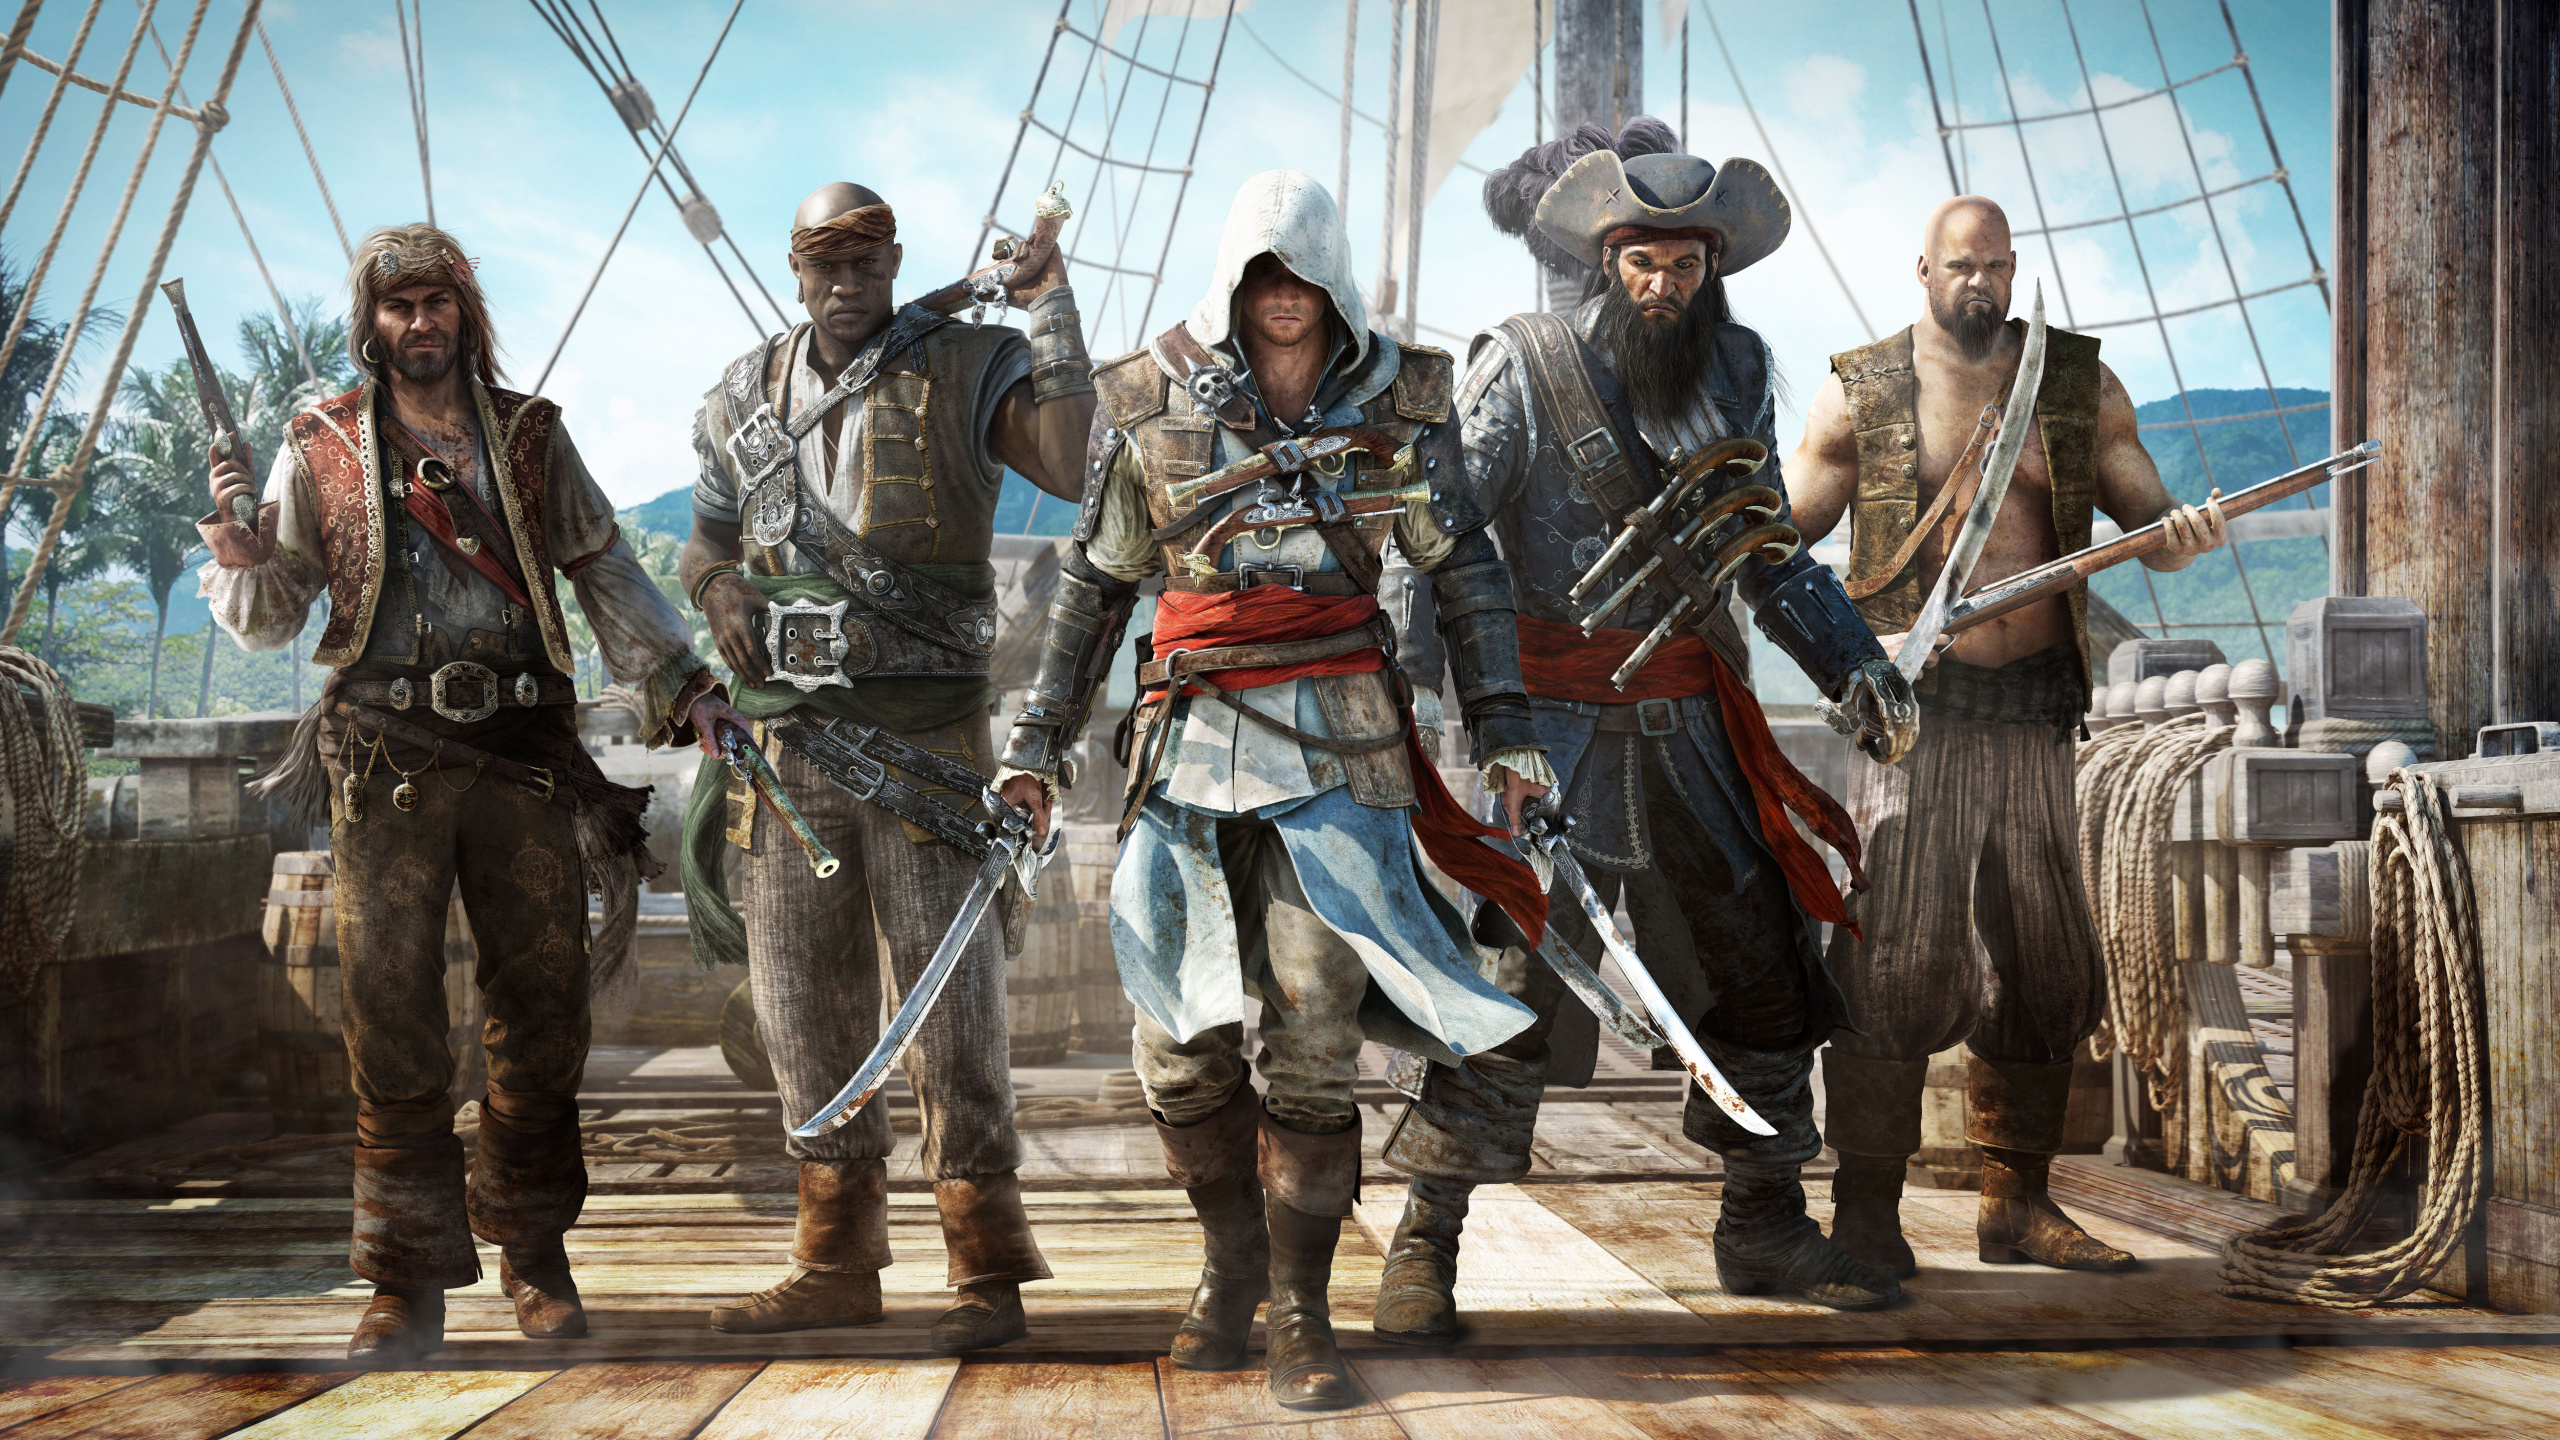 Assassins Creed III, Ubisoft, Haytham Kenway, Assassins Creed Black Flag, Les Jeux Vidéo. Wallpaper in 2560x1440 Resolution